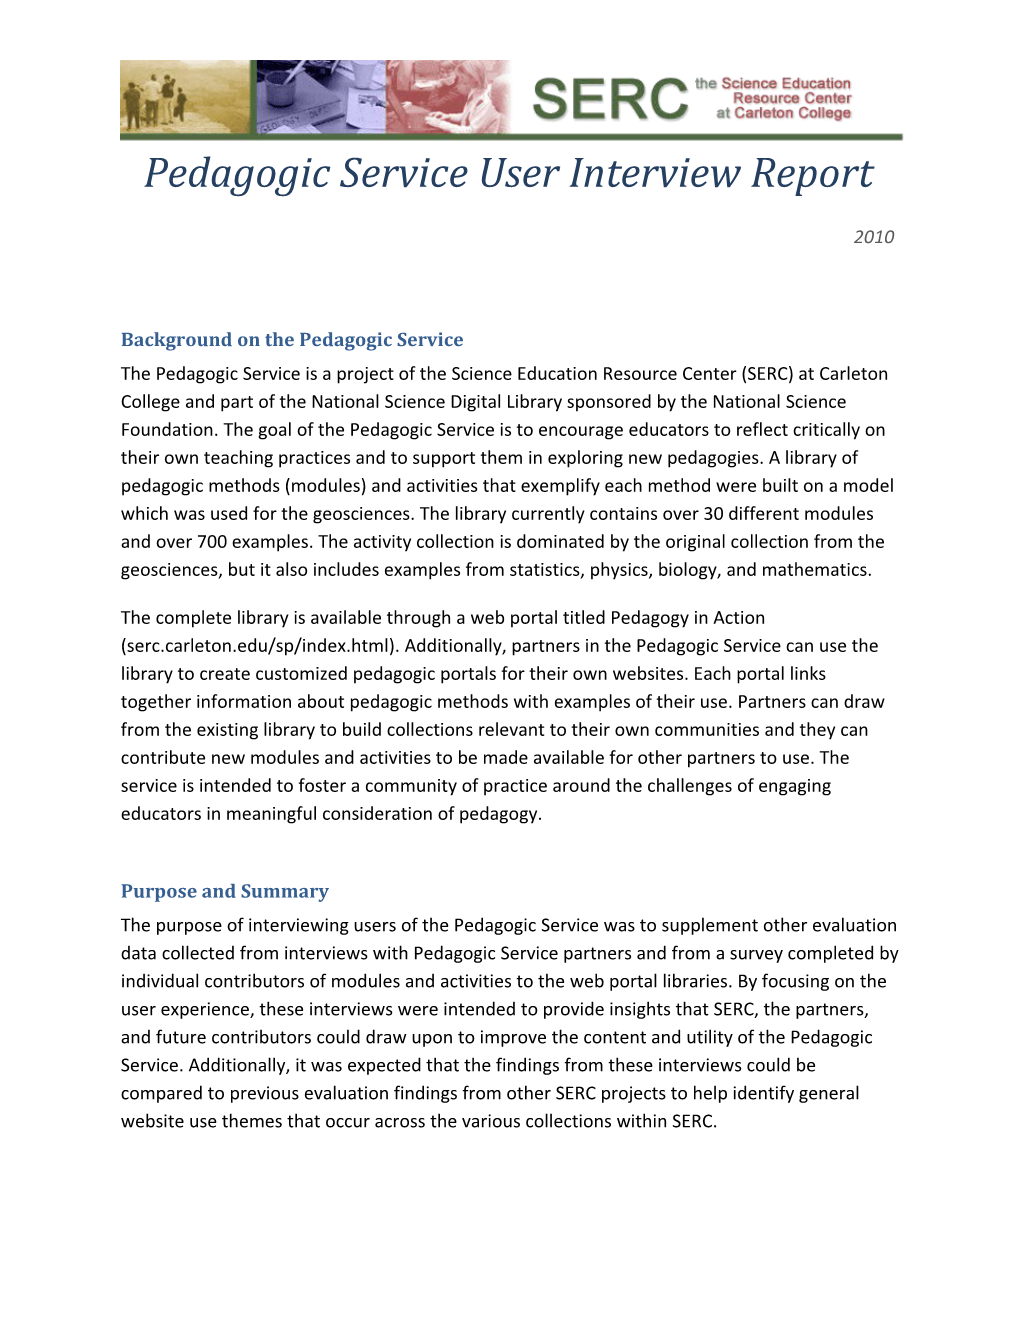 Pedagogic Service User Interview Report 2010